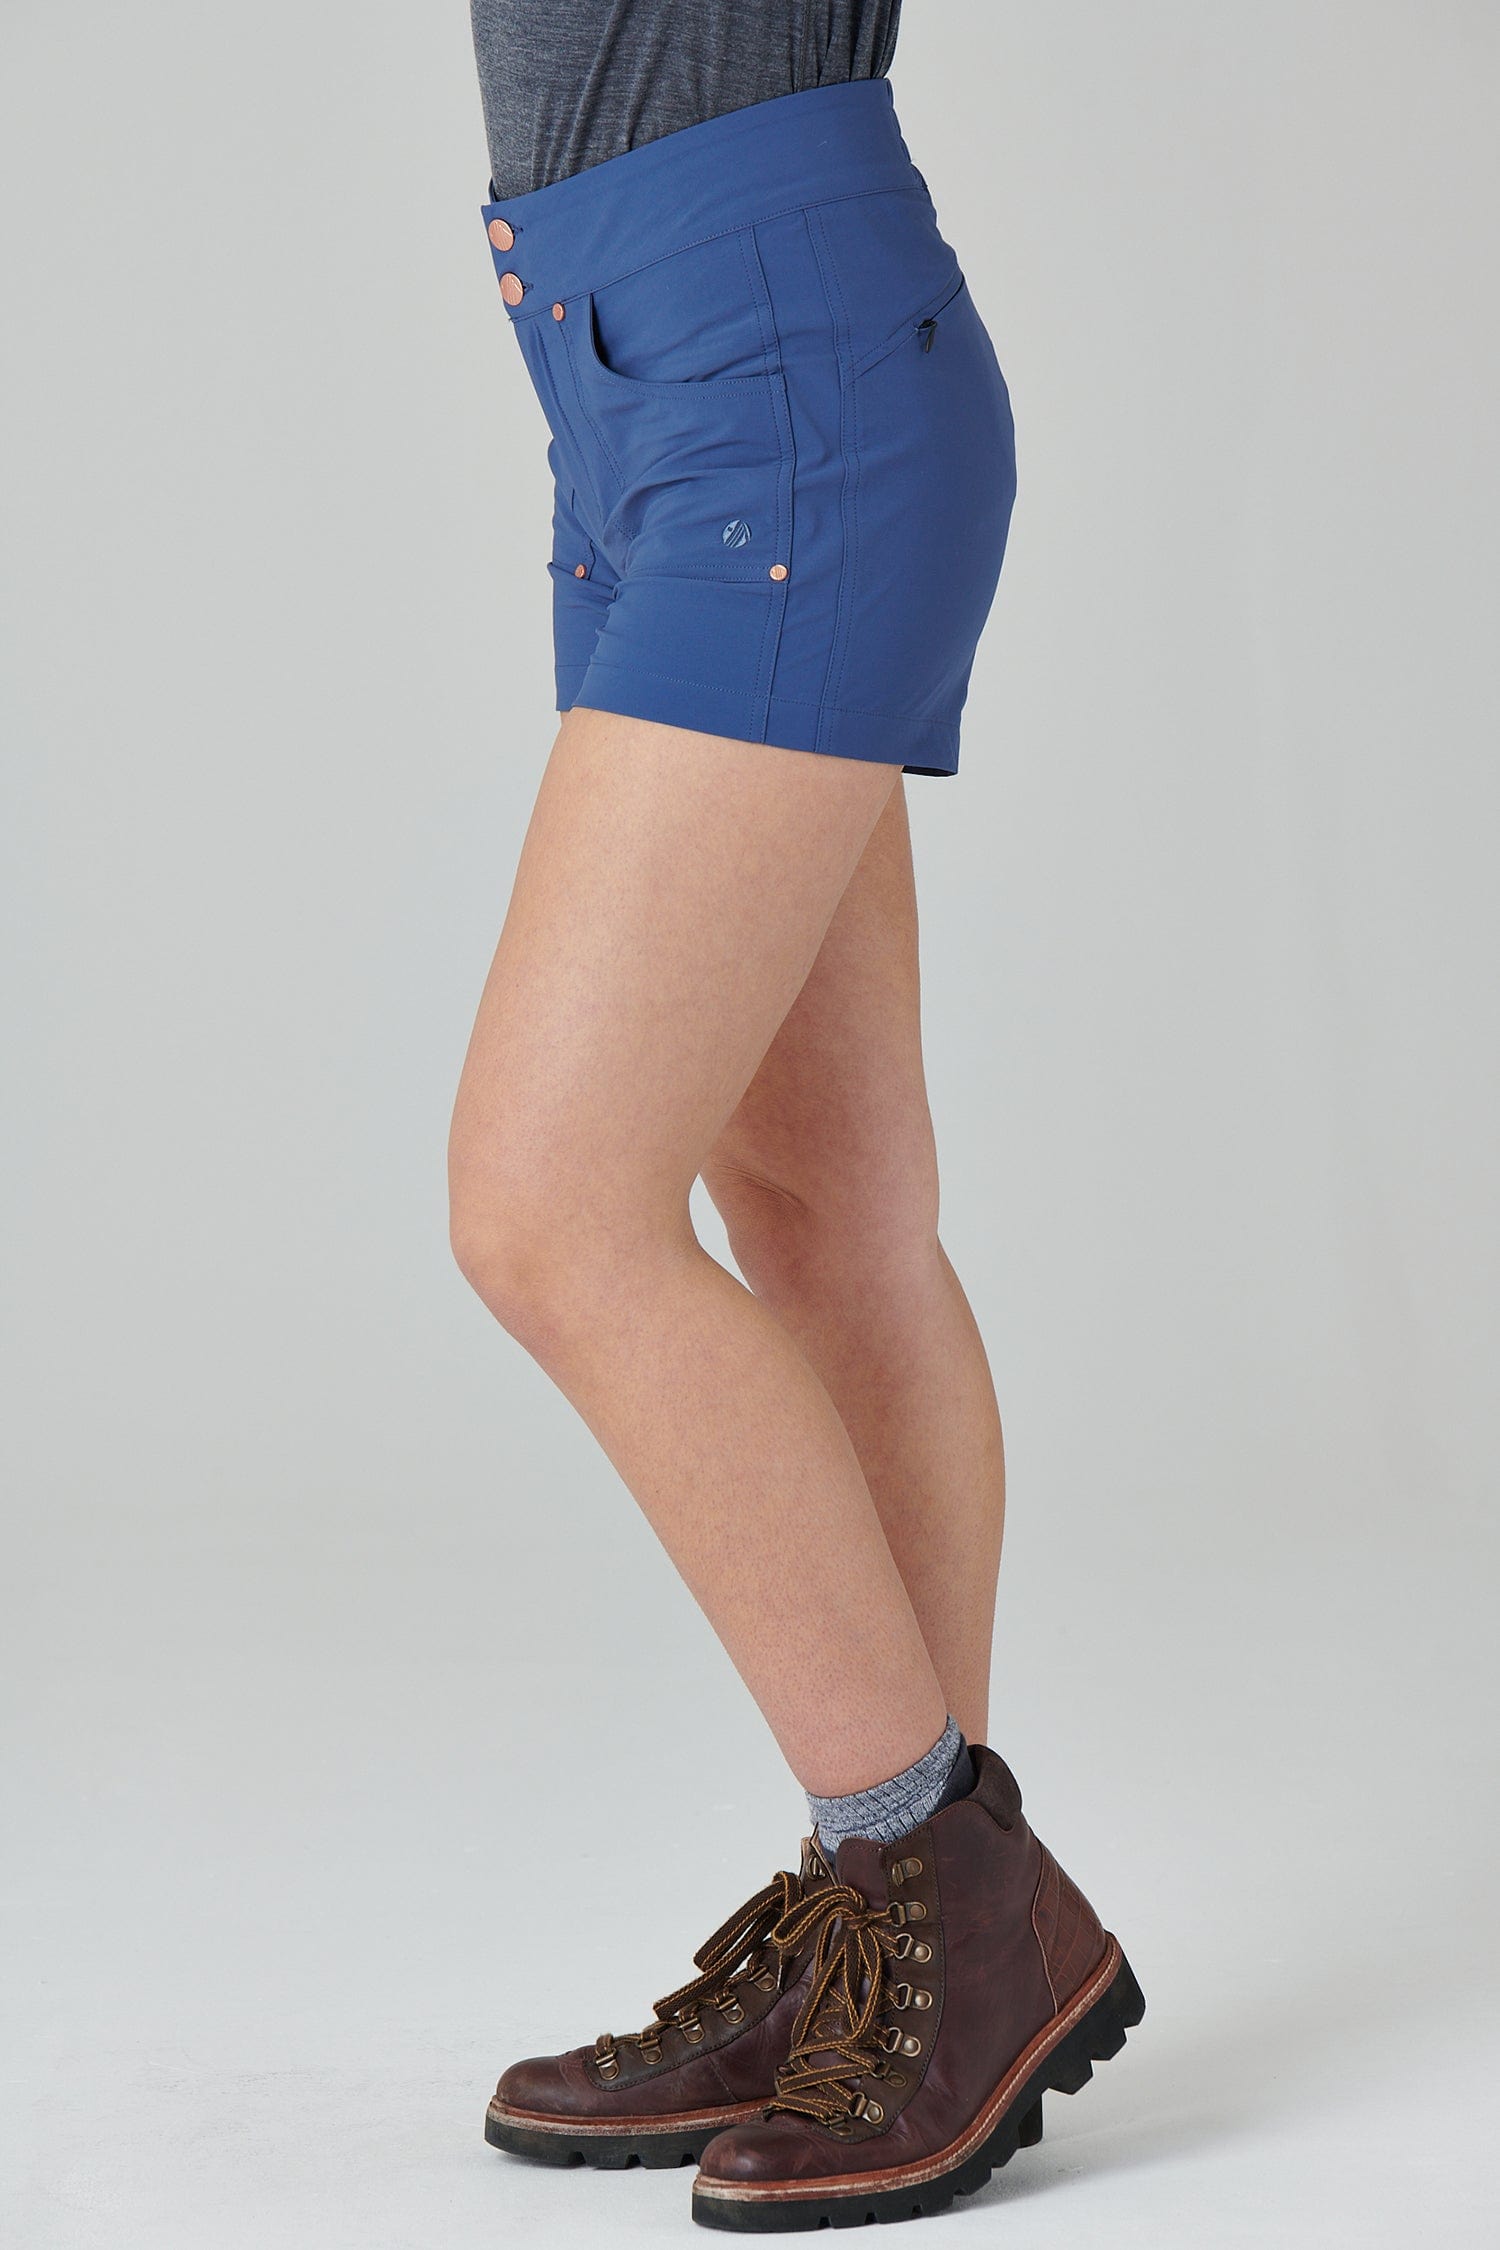 Trek Shorts - Steel Blue - 24 / Uk6 - Womens - Acai Outdoorwear